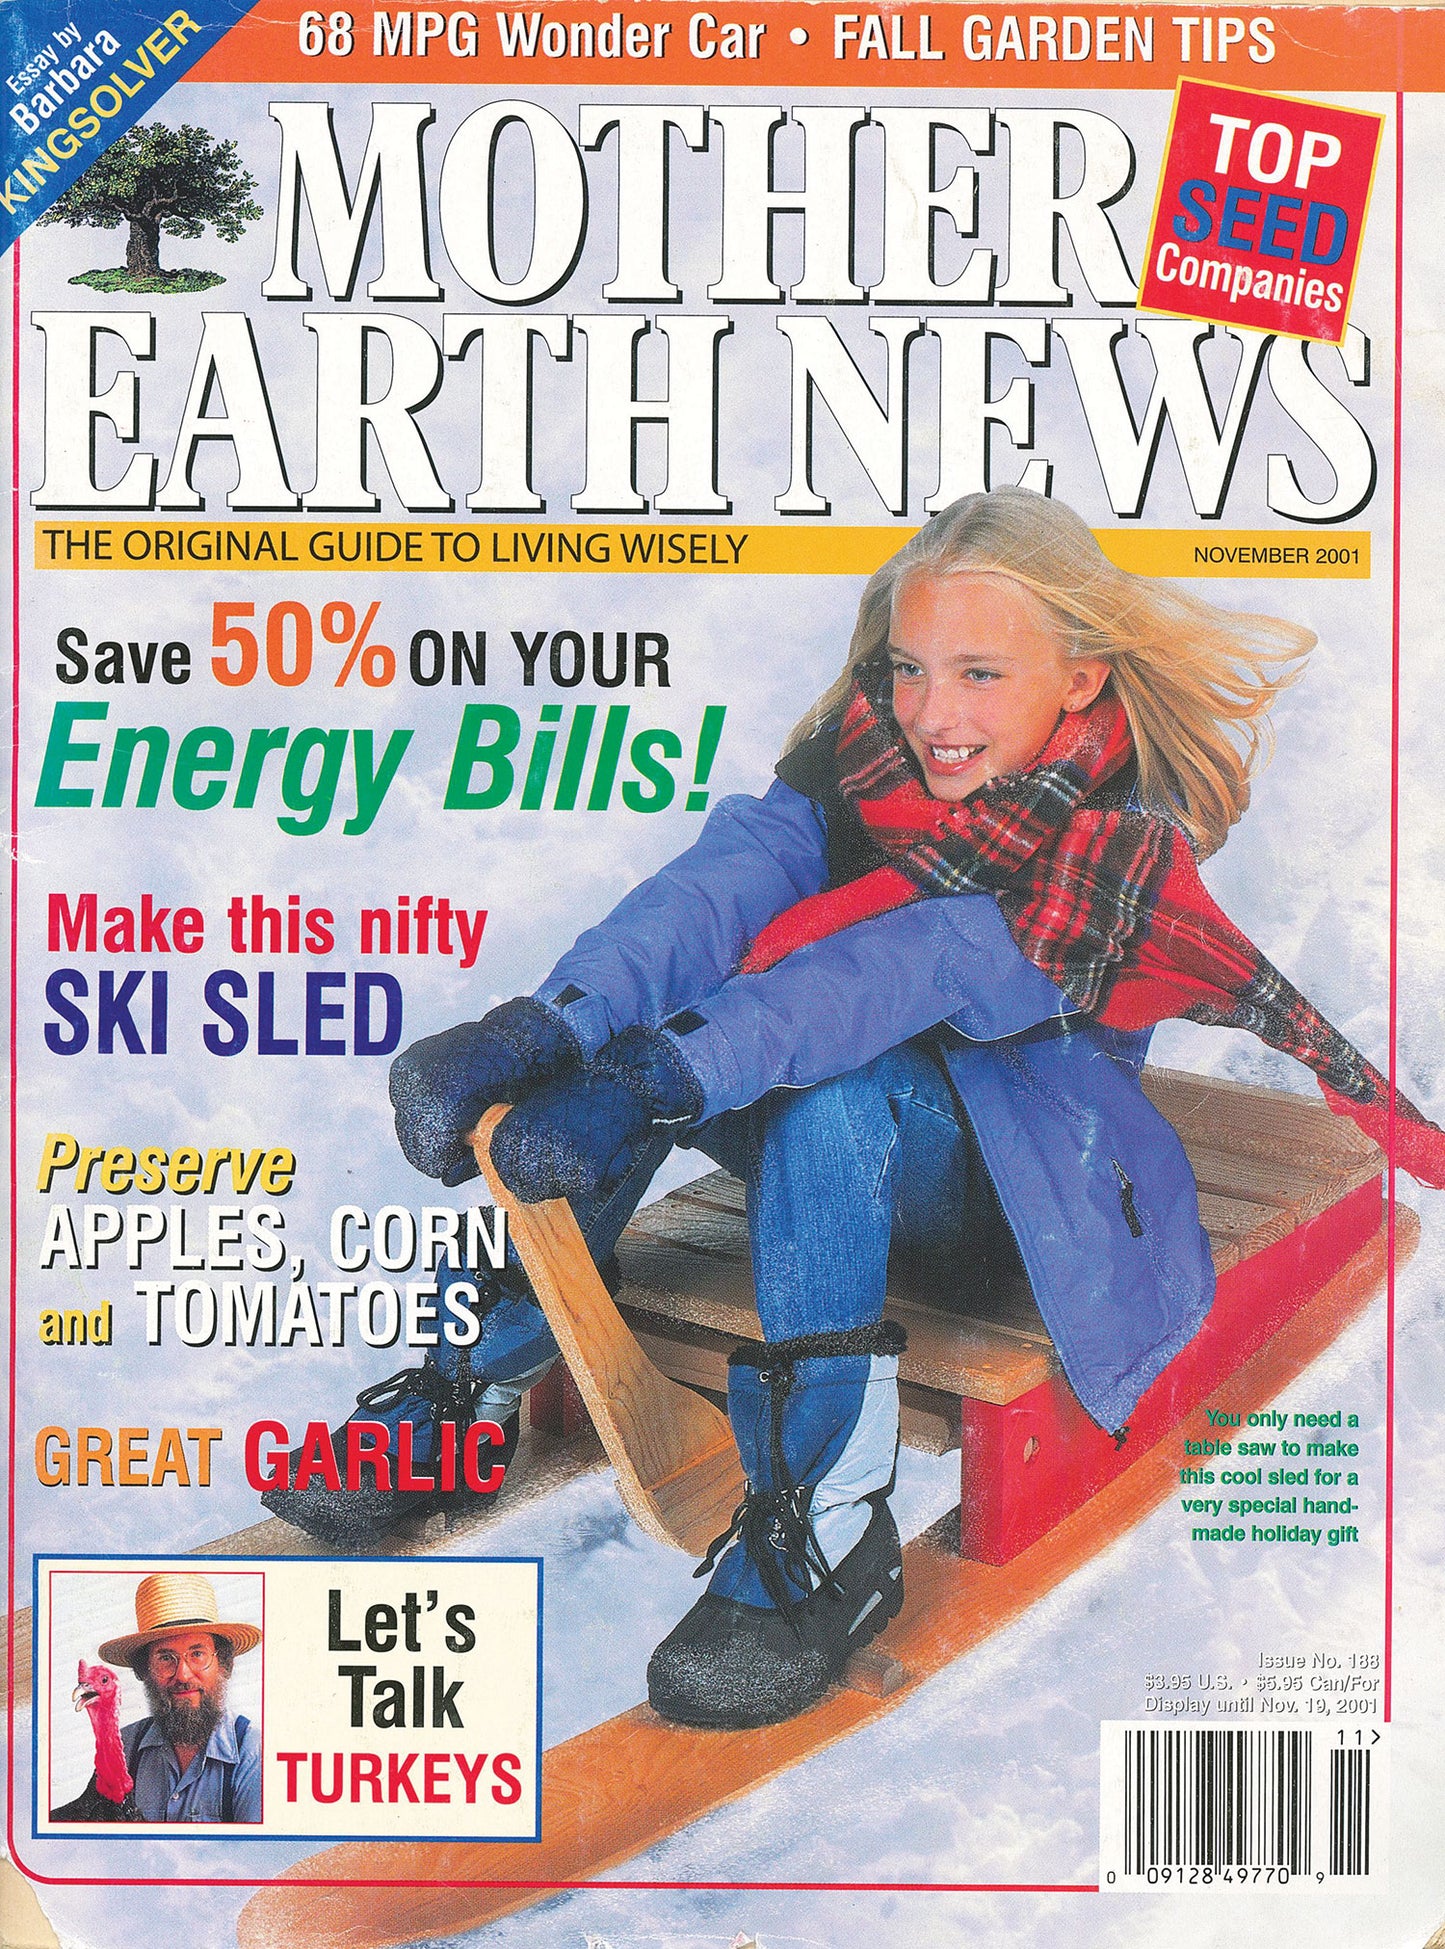 MOTHER EARTH NEWS MAGAZINE, OCTOBER/NOVEMBER 2001 #188